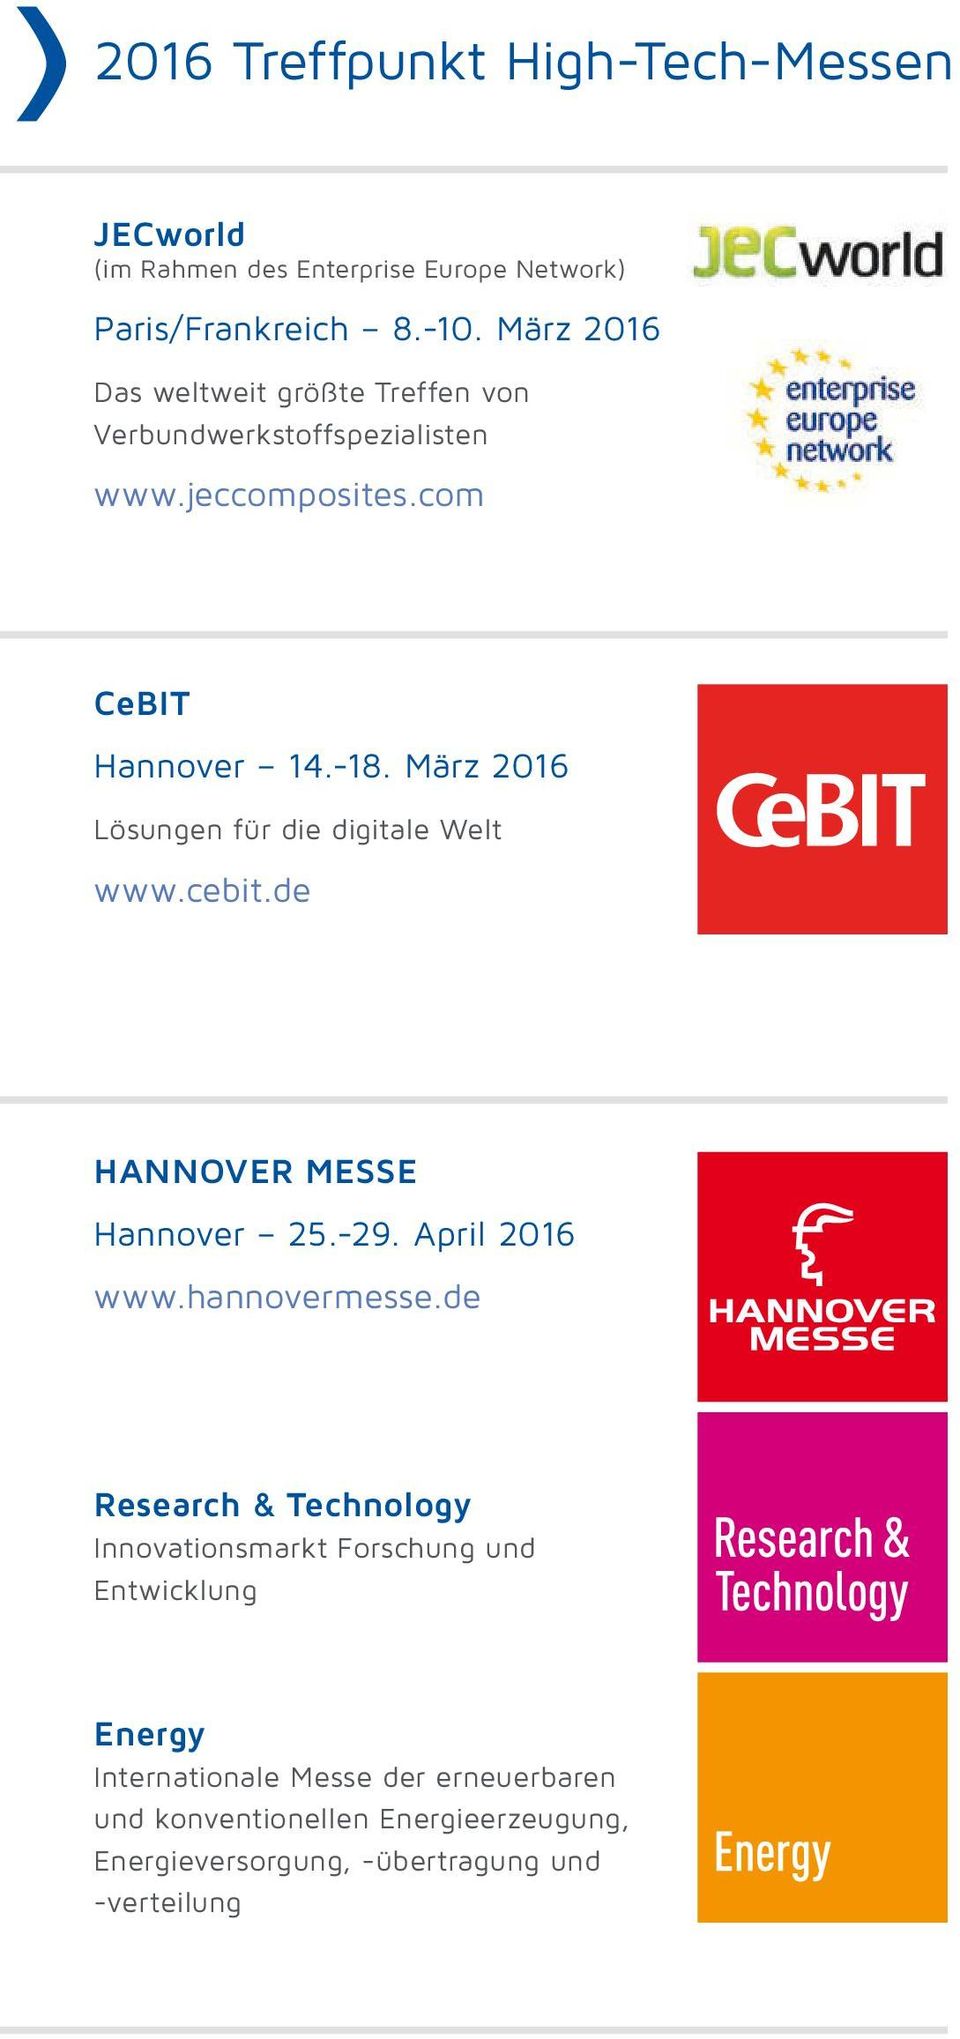 März 2016 Lösungen für die digitale Welt www.cebit.de HANNOVER MESSE Hannover 25.-29. April 2016 www.hannovermesse.